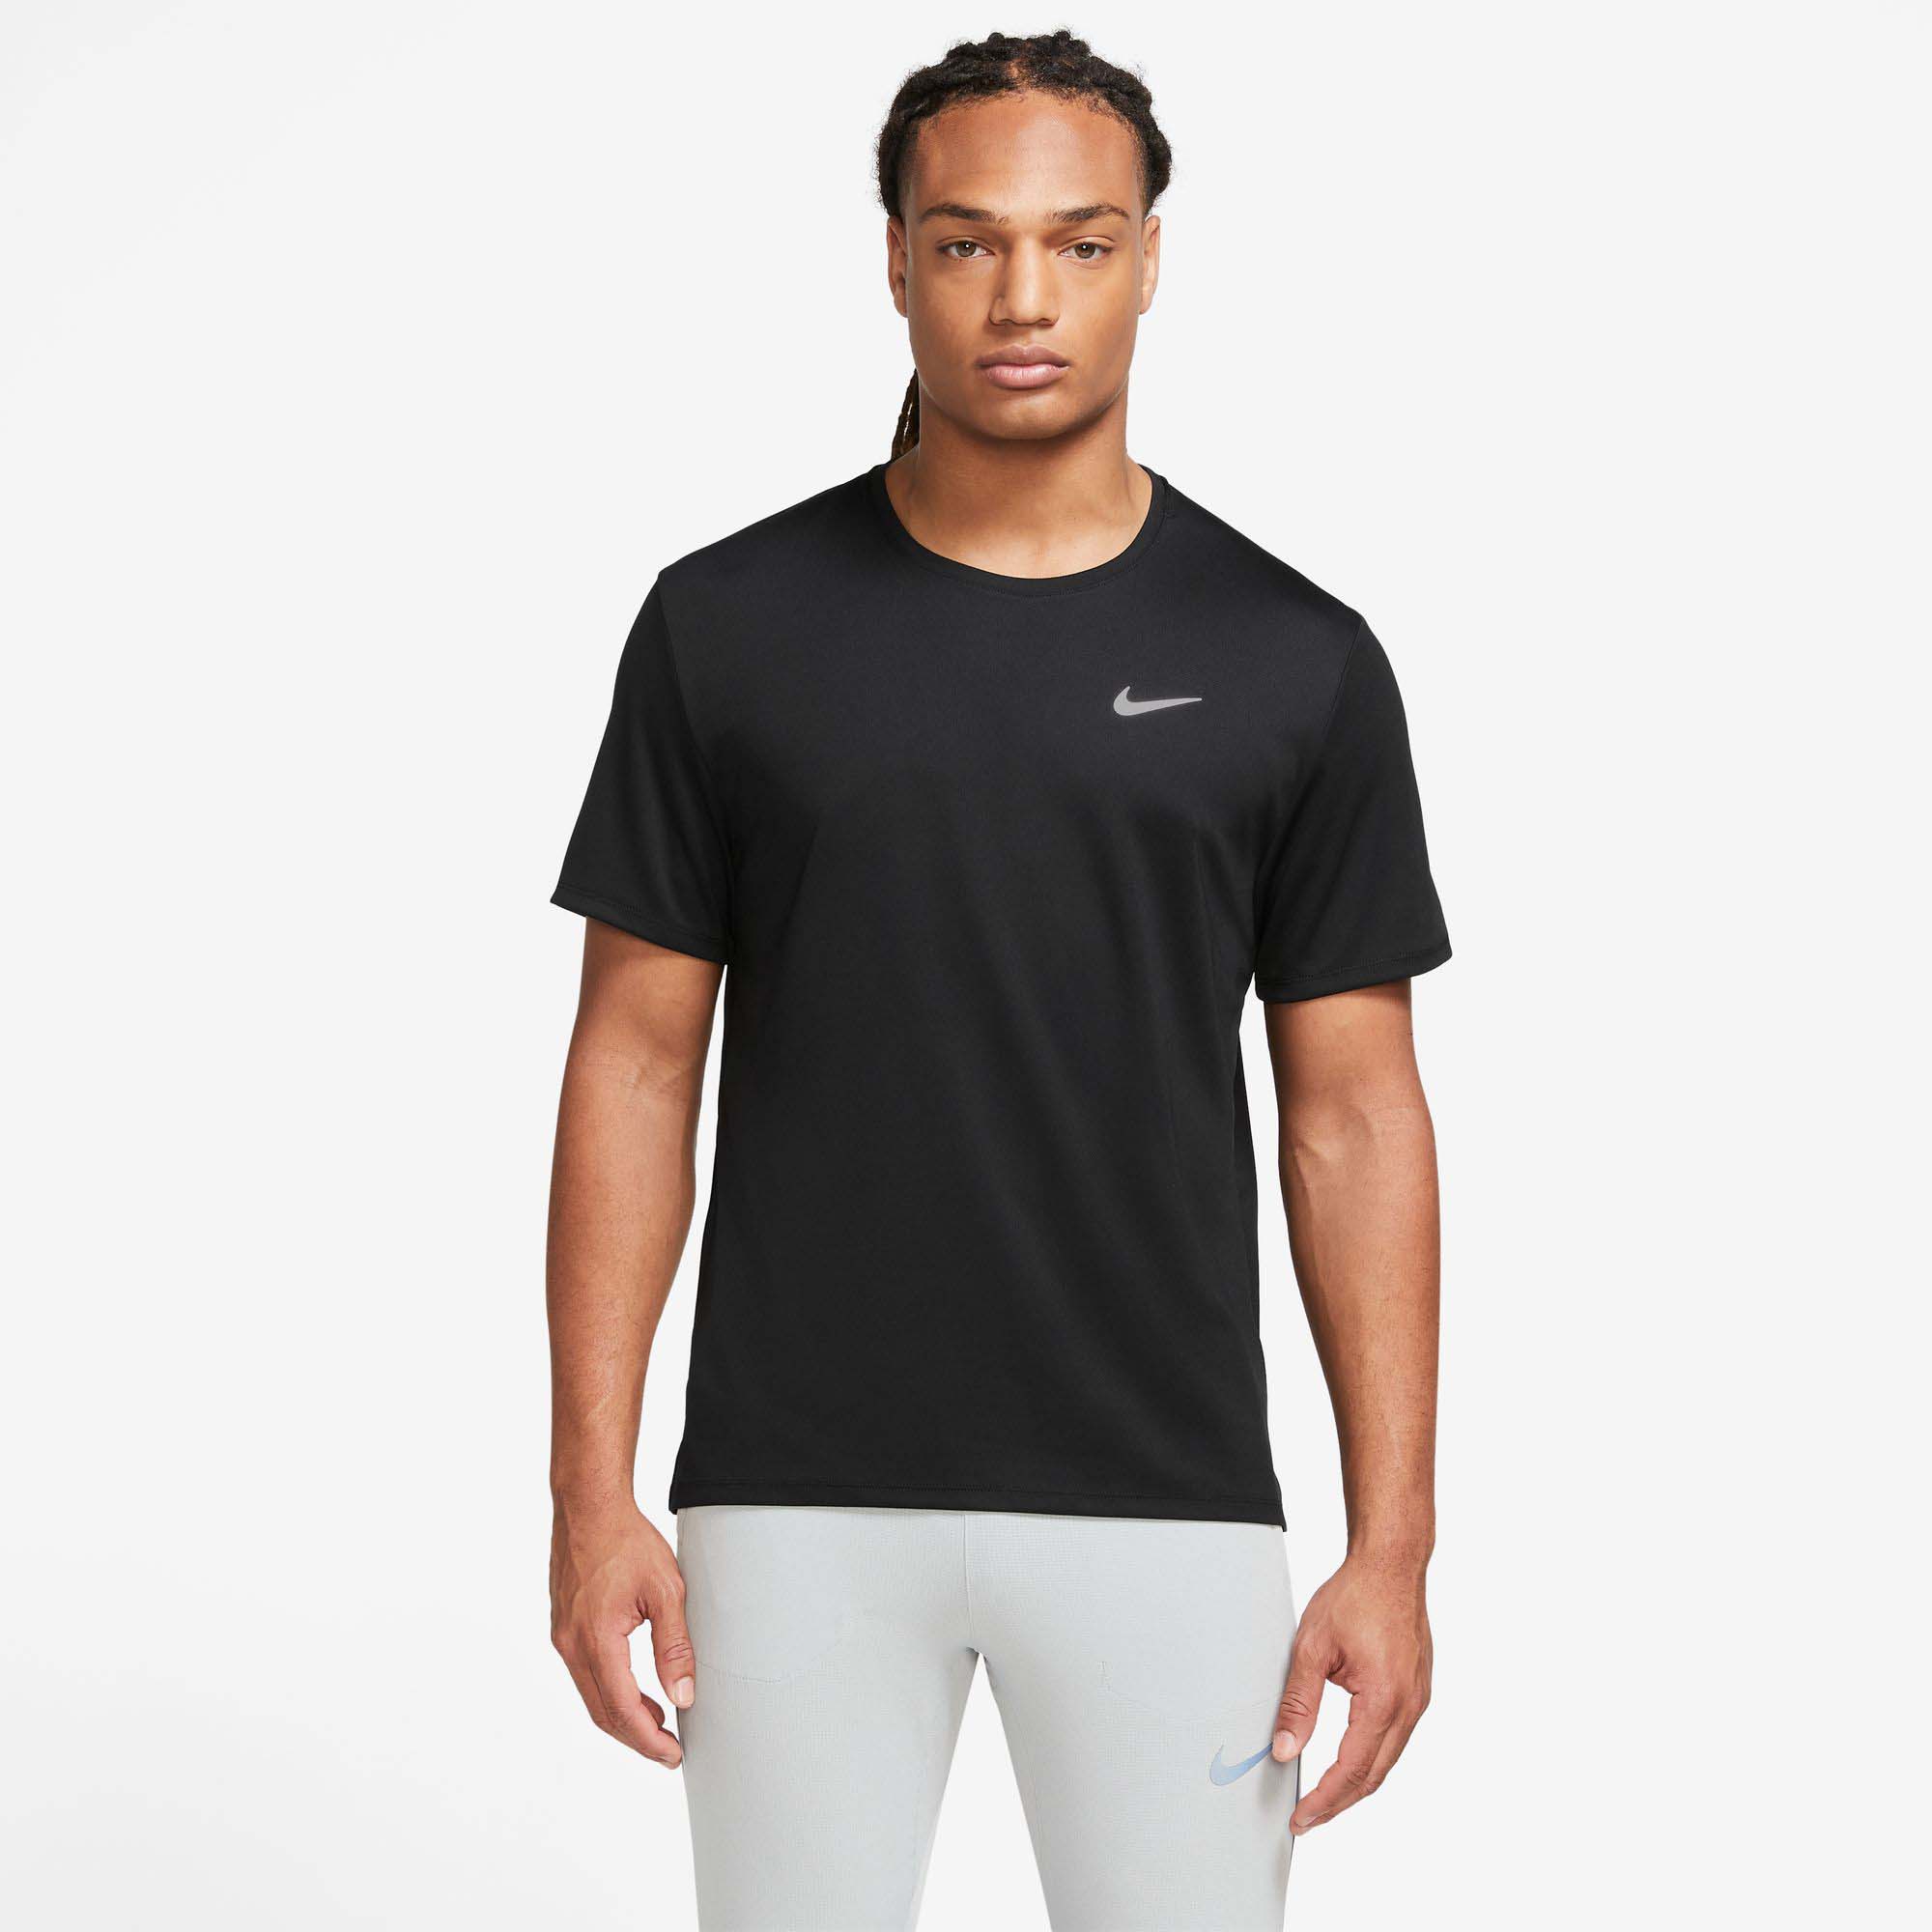 Nike Men's Dri-FIT UV Short-Sleeve Running Top Run4It